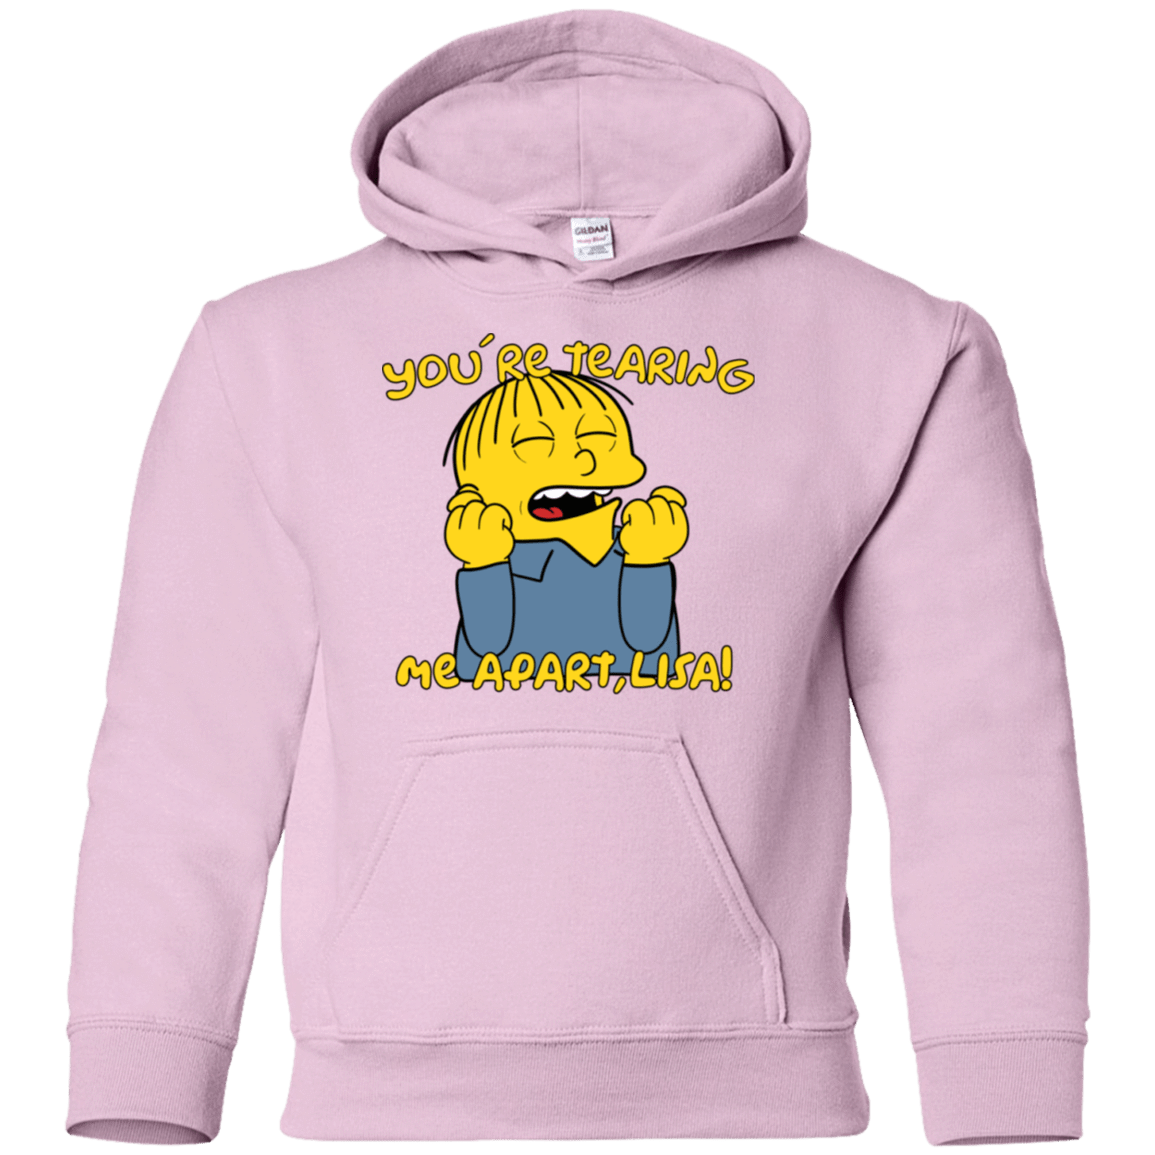 Sweatshirts Light Pink / YS Ralph Wiseau Youth Hoodie